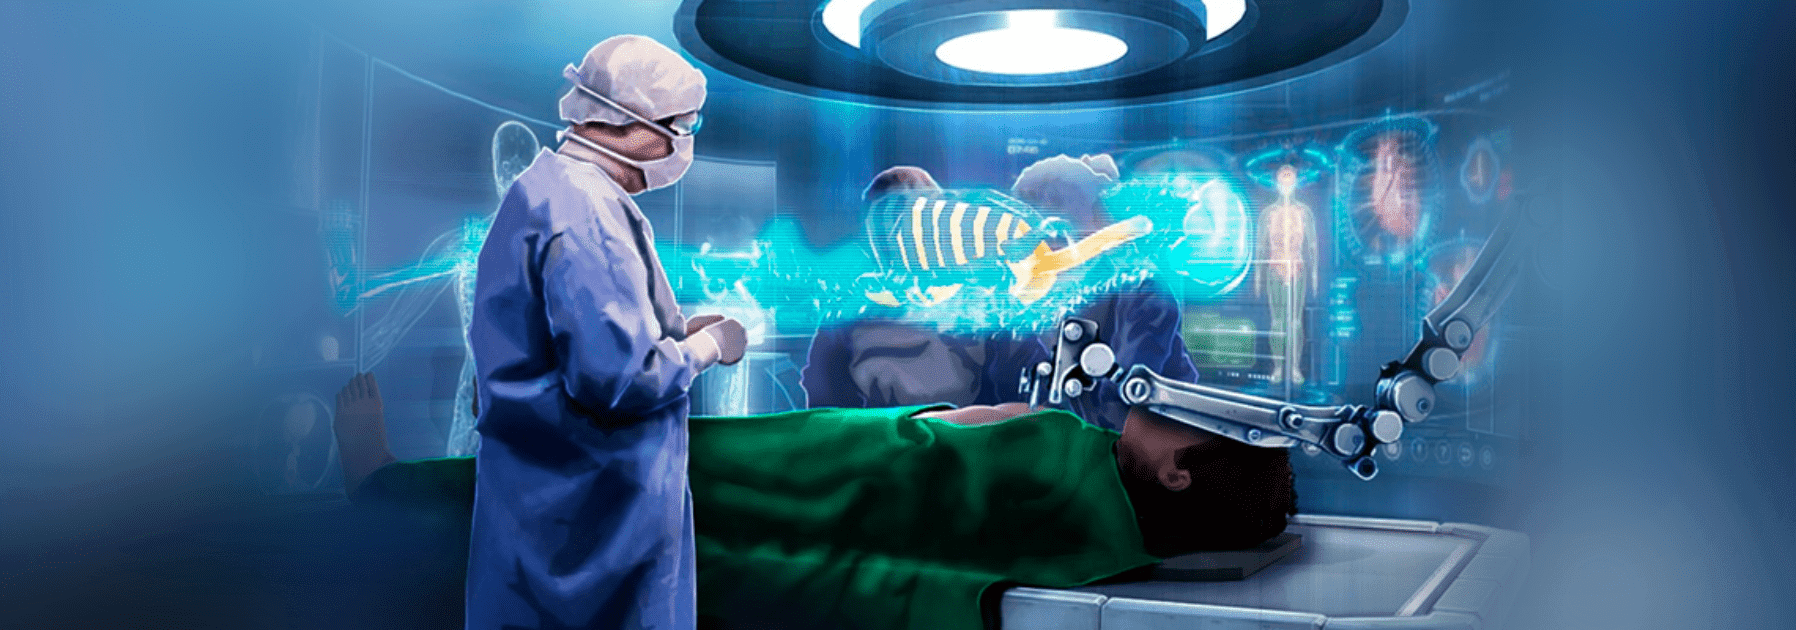 VR technologies in medicine